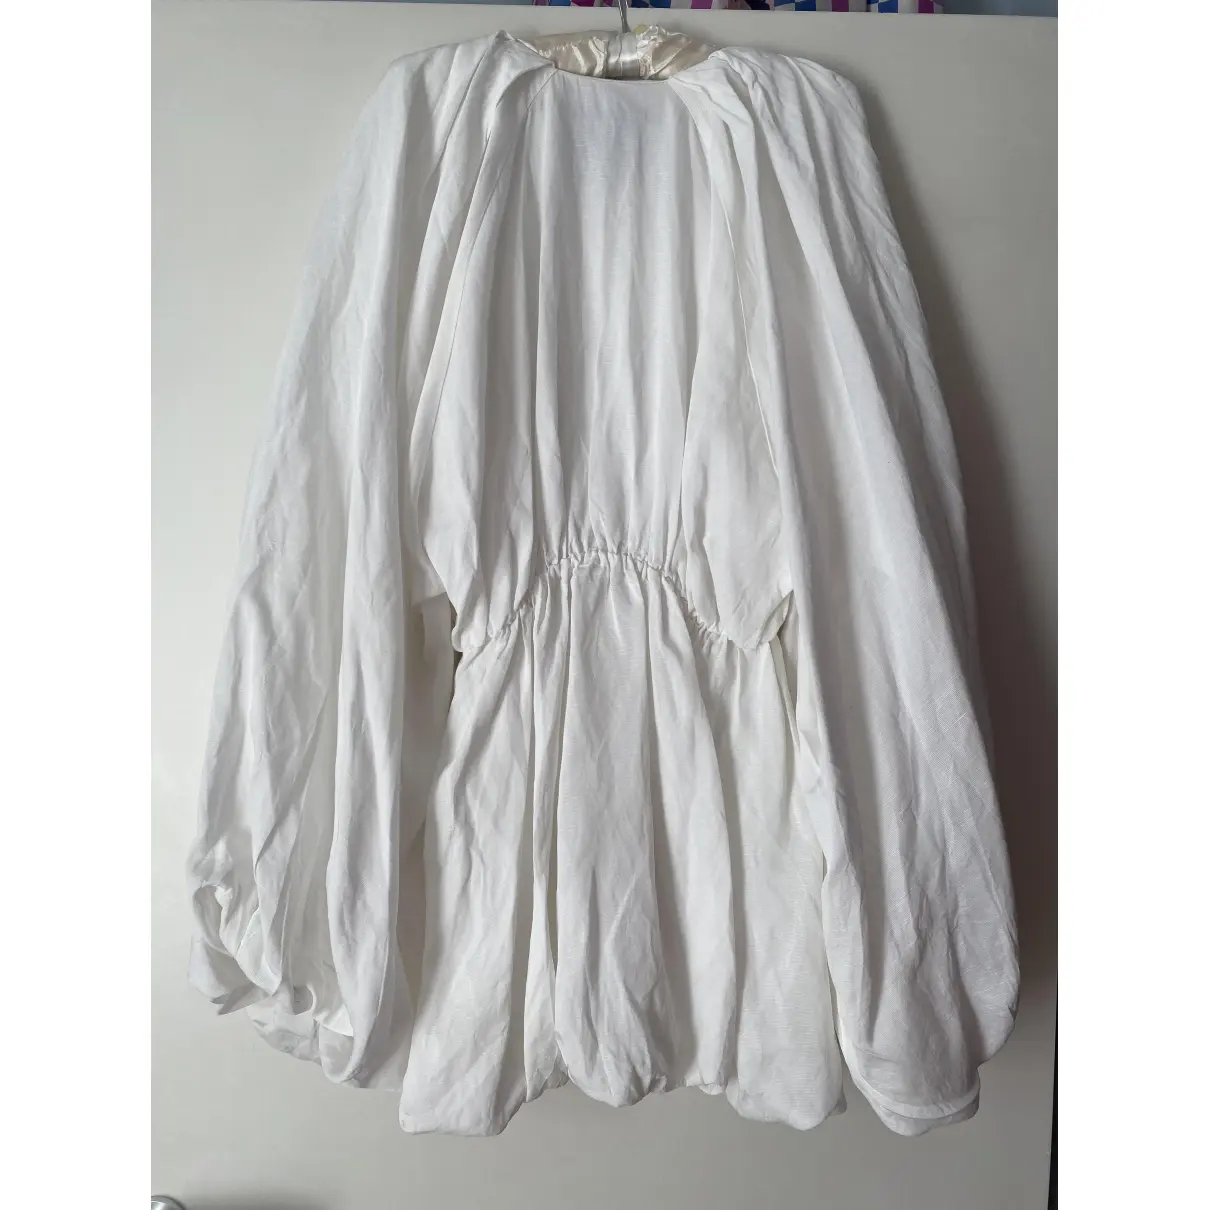 Buy Loeil Mini dress online